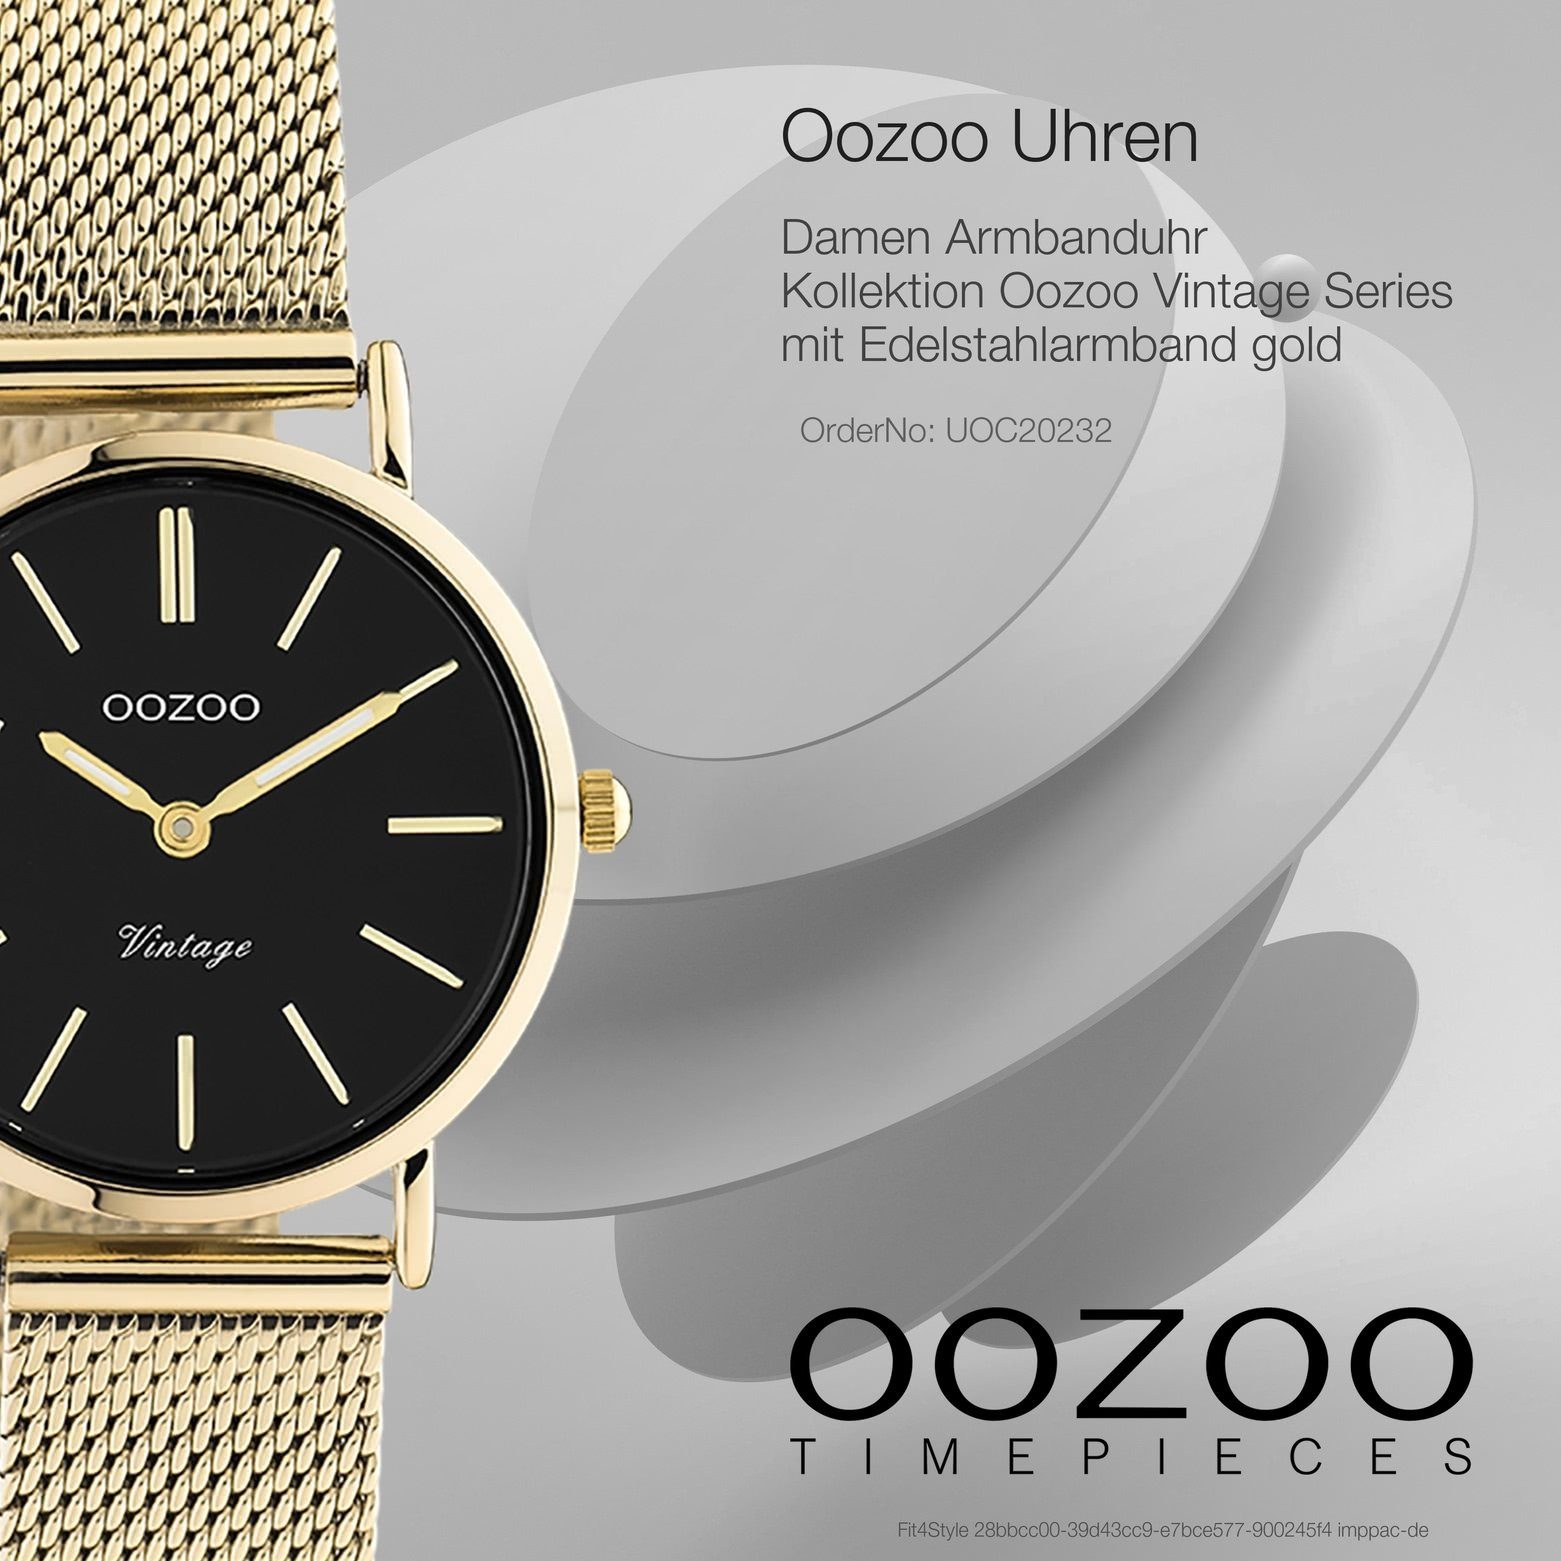 klein (ca Oozoo Damen, Analog, Herrenuhr 28mm) Armbanduhr Edelstahlarmband, gold OOZOO Unisex Elegant-Style Quarzuhr rund,